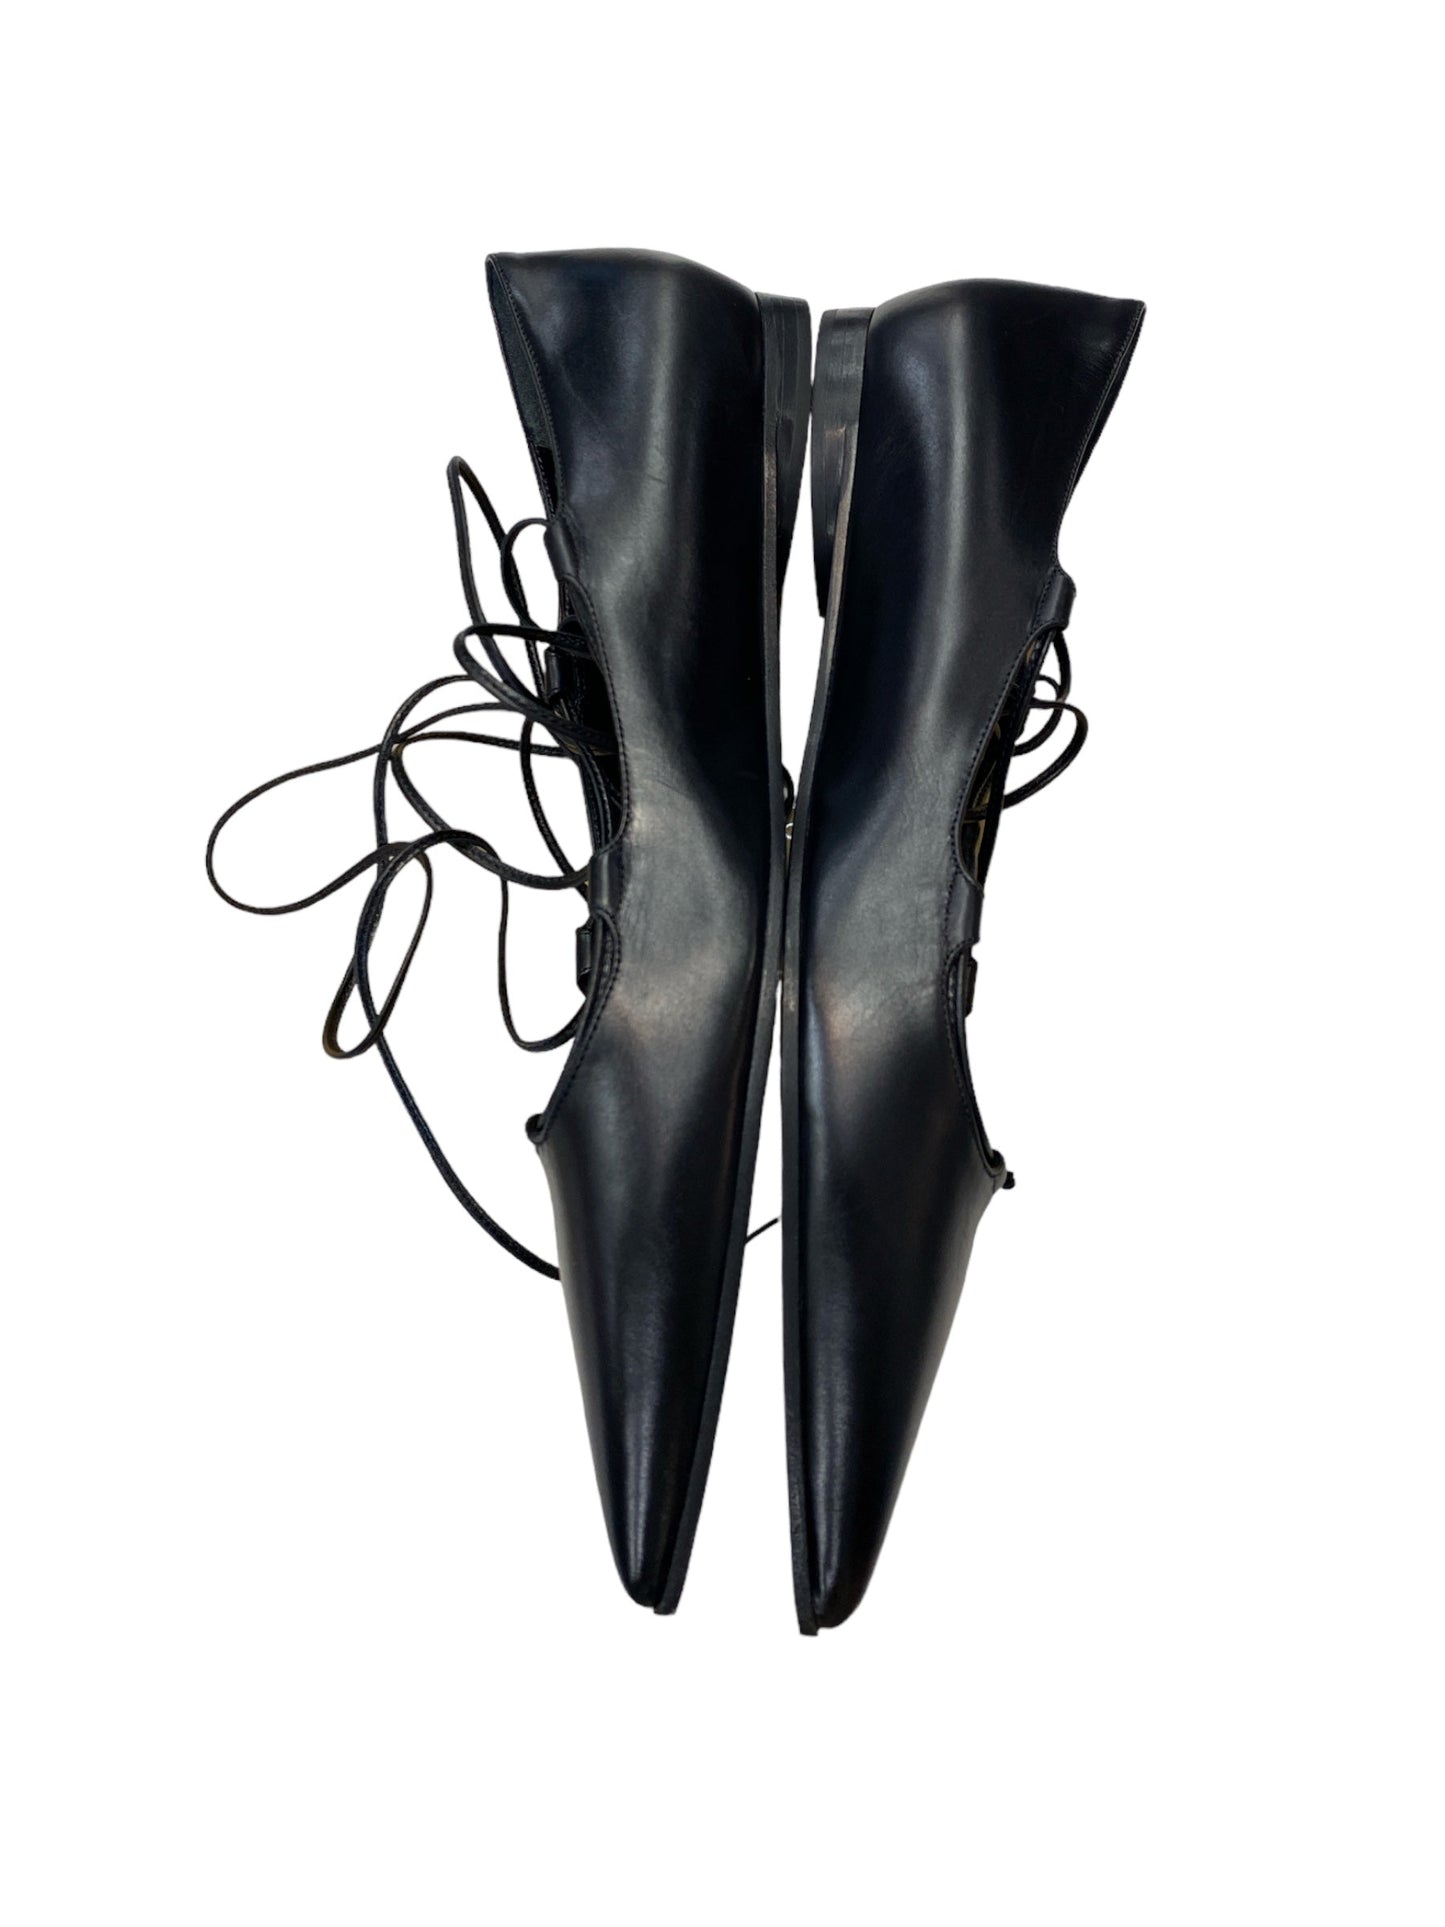 Shoes Flats Ballet By Michael Kors Size: 9